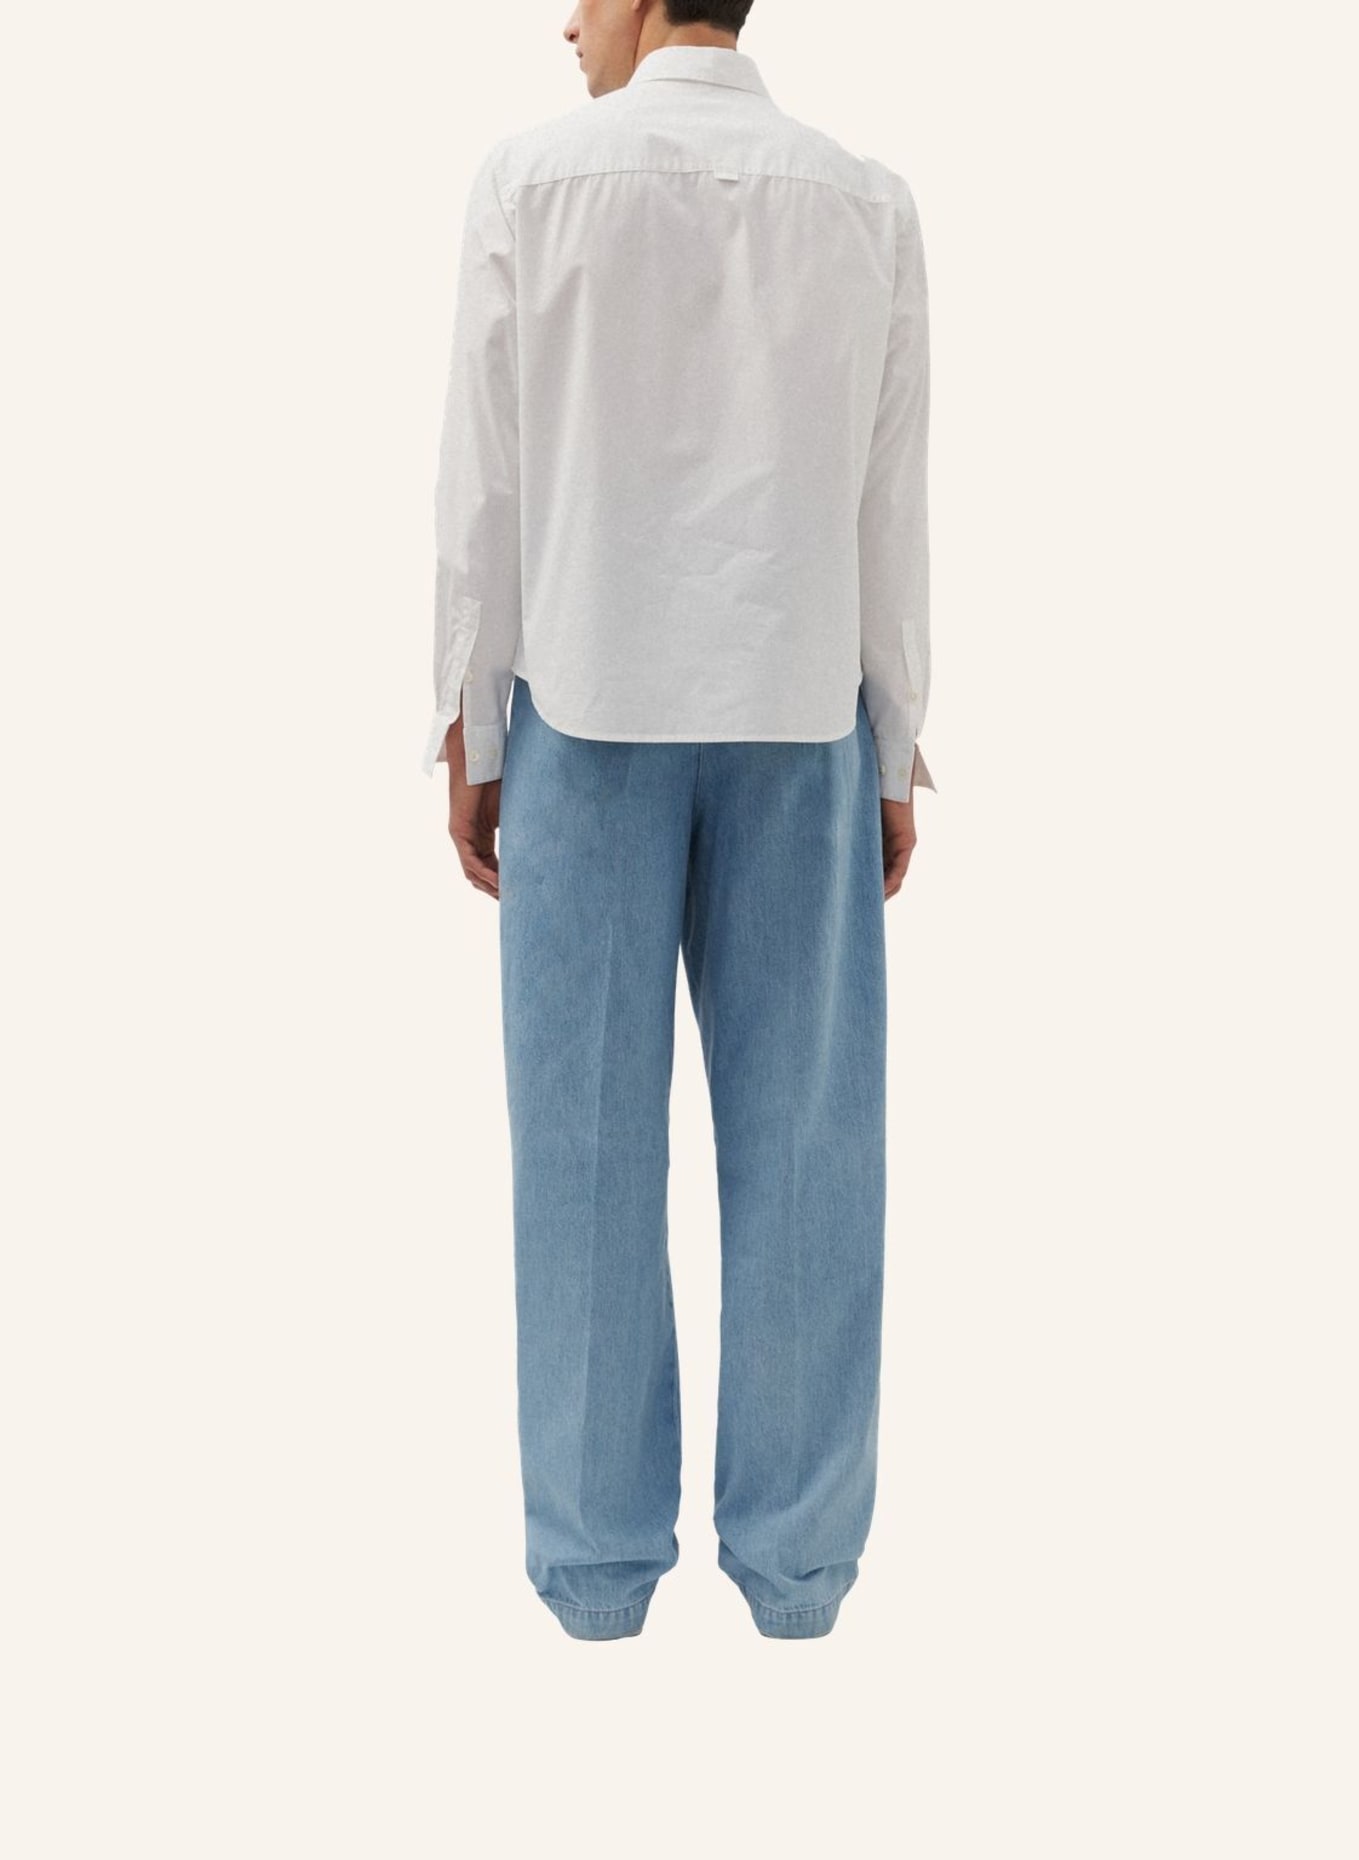 studio seidensticker Hemd, Casual Hemd Regular Fit, Farbe: WEISS (Bild 3)